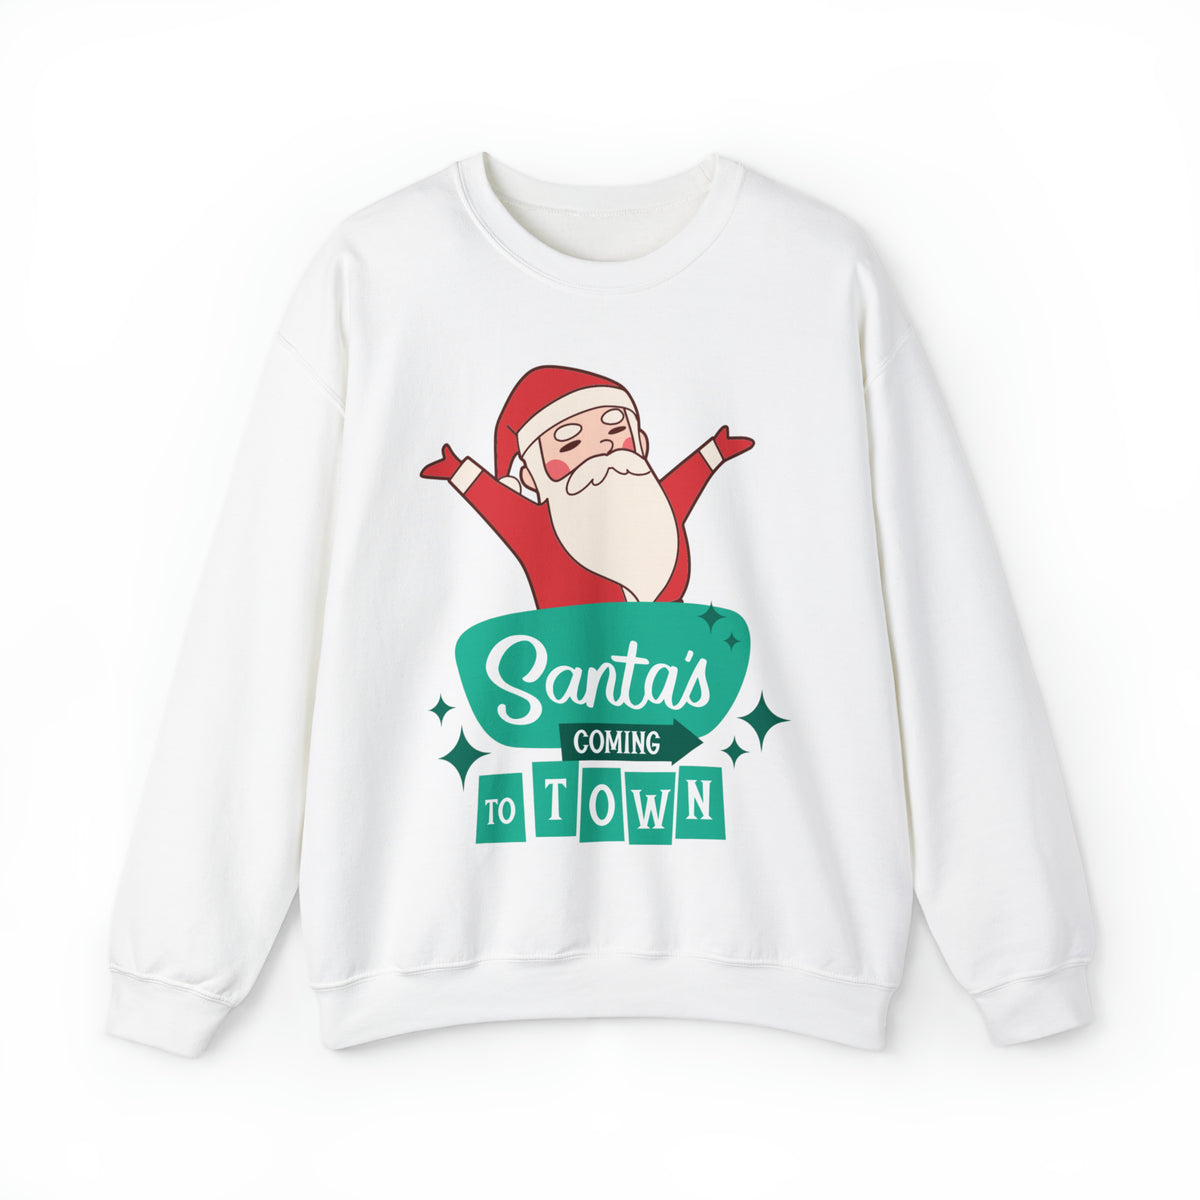 Santas Coming To Town Sweater, Christmas Sweatshirt, Christmas Sweater, Christmas Party Outfit, Holiday Gifts, Funny Christmas Sweater, Ugly Christmas Sweater, Holiday Sweatshirt, Cozy Sweater